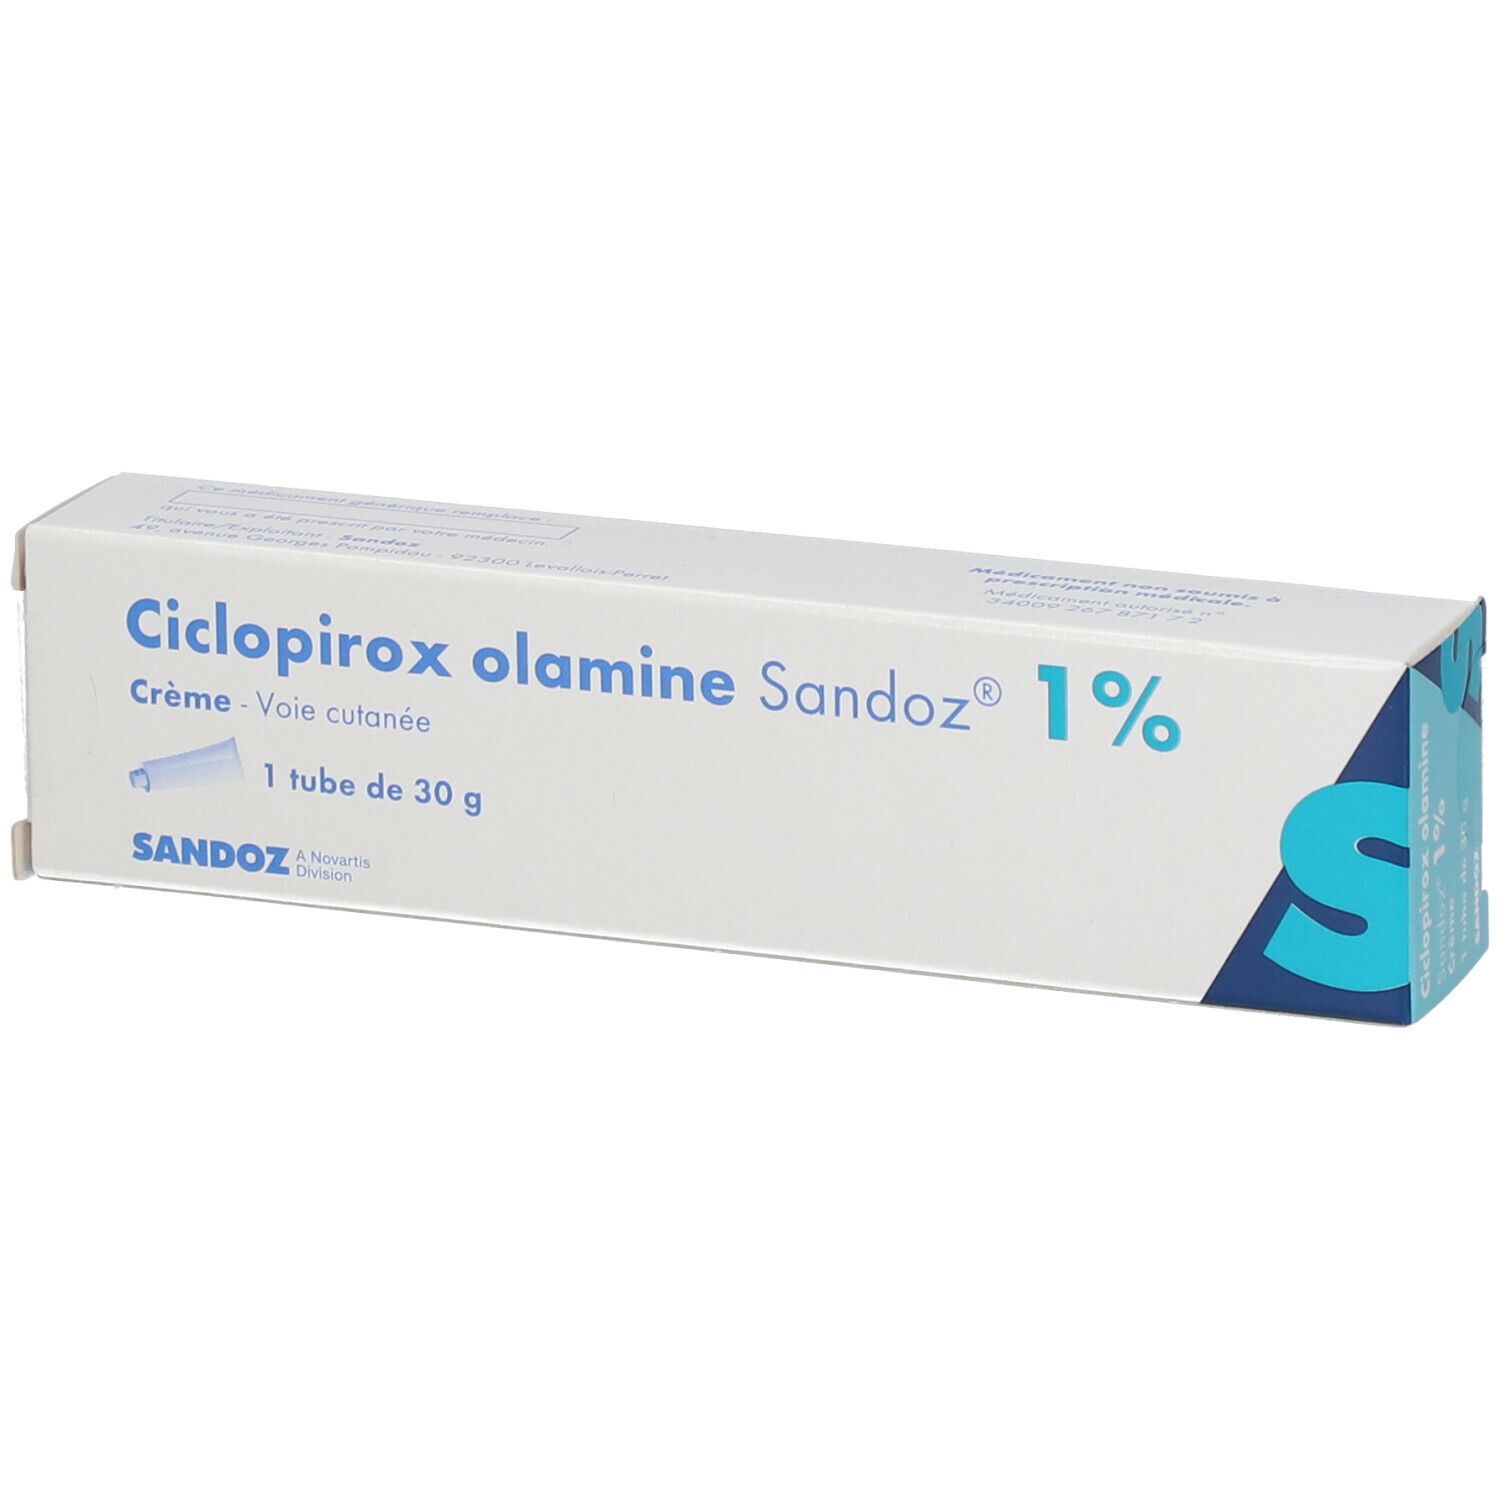 Ciclopirox olamine Sandoz®